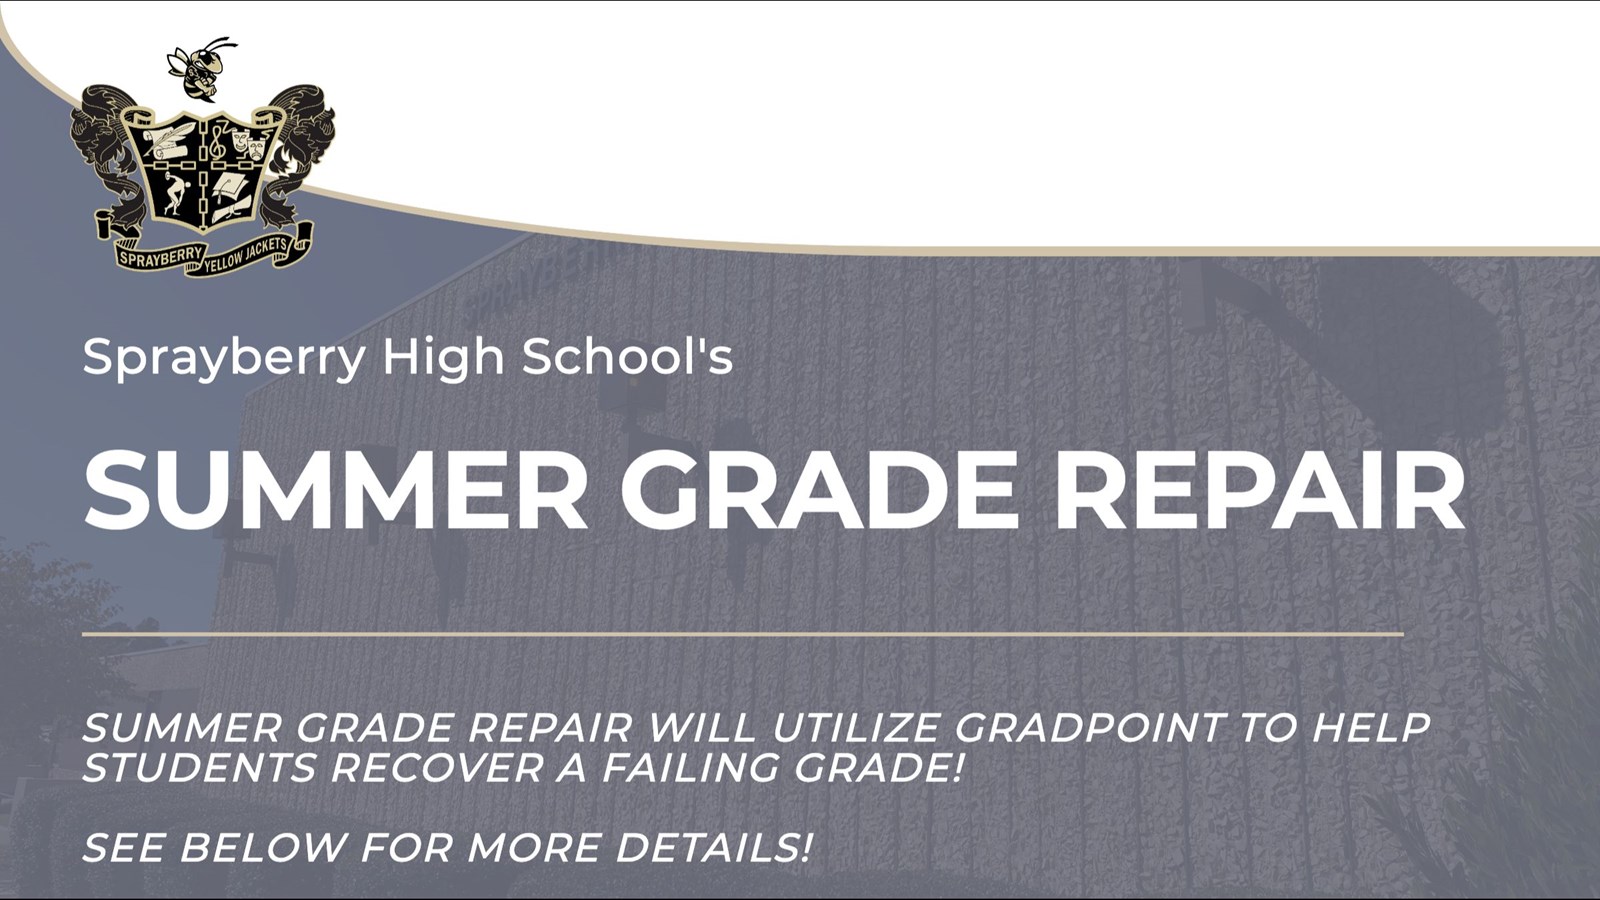 SUMMER GRADE REPAIR - Sprayberry High School